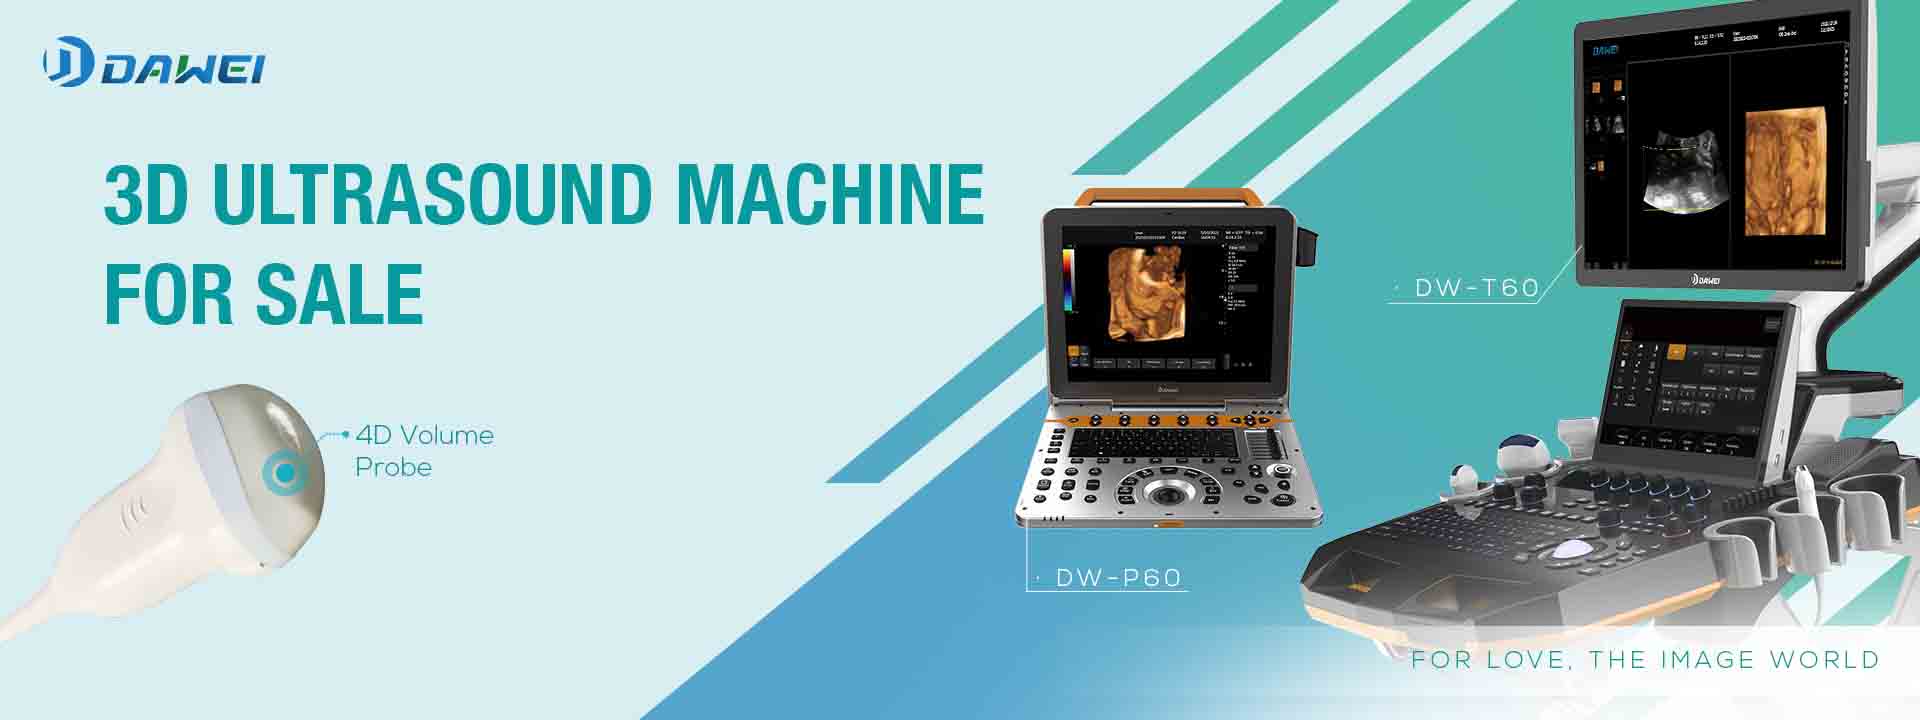 3D ultrasound machine for sale-1920